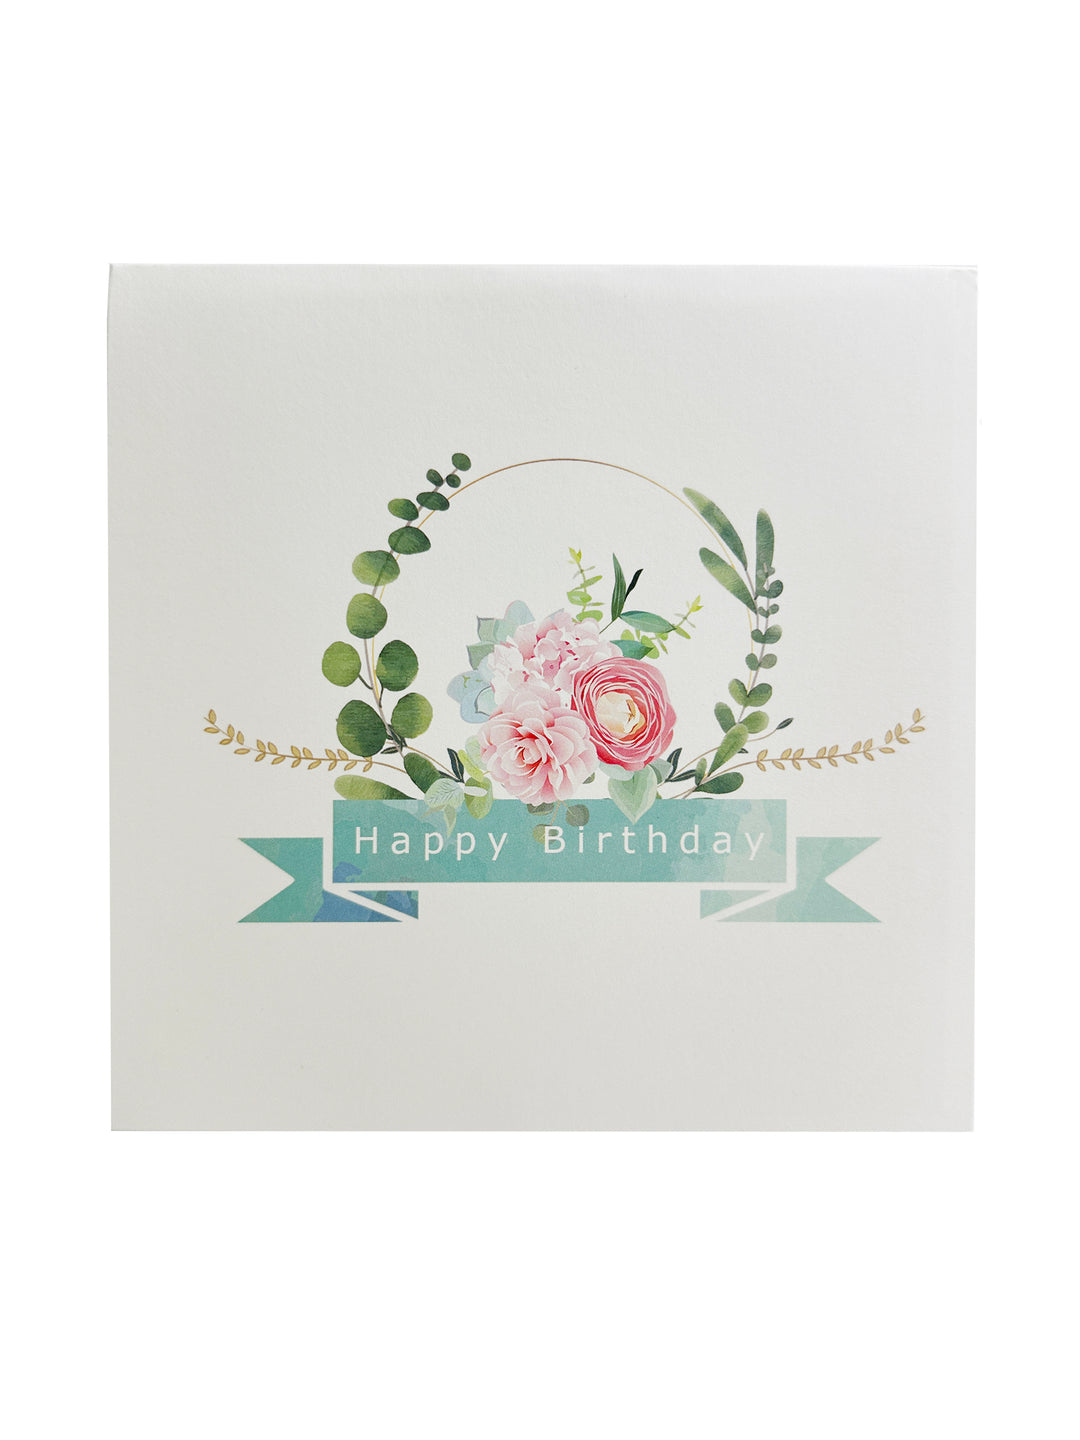 Floral Cake Pop-Up Birthday Card